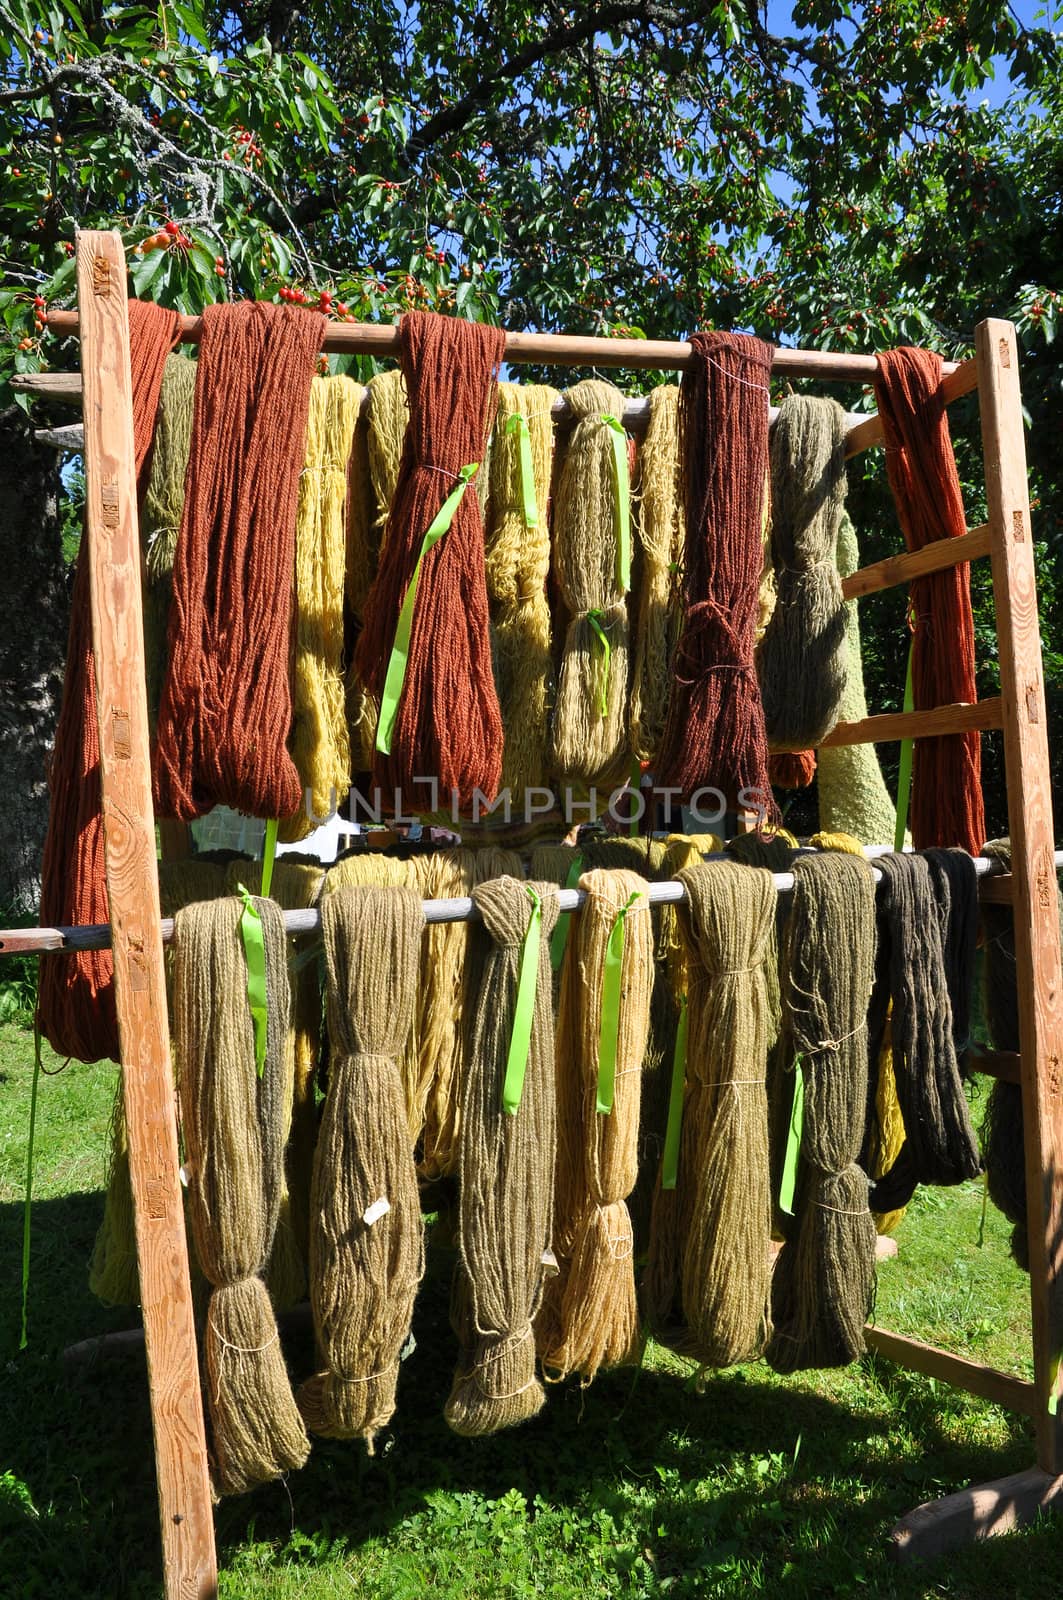 Handmade yarn on a wooden rack